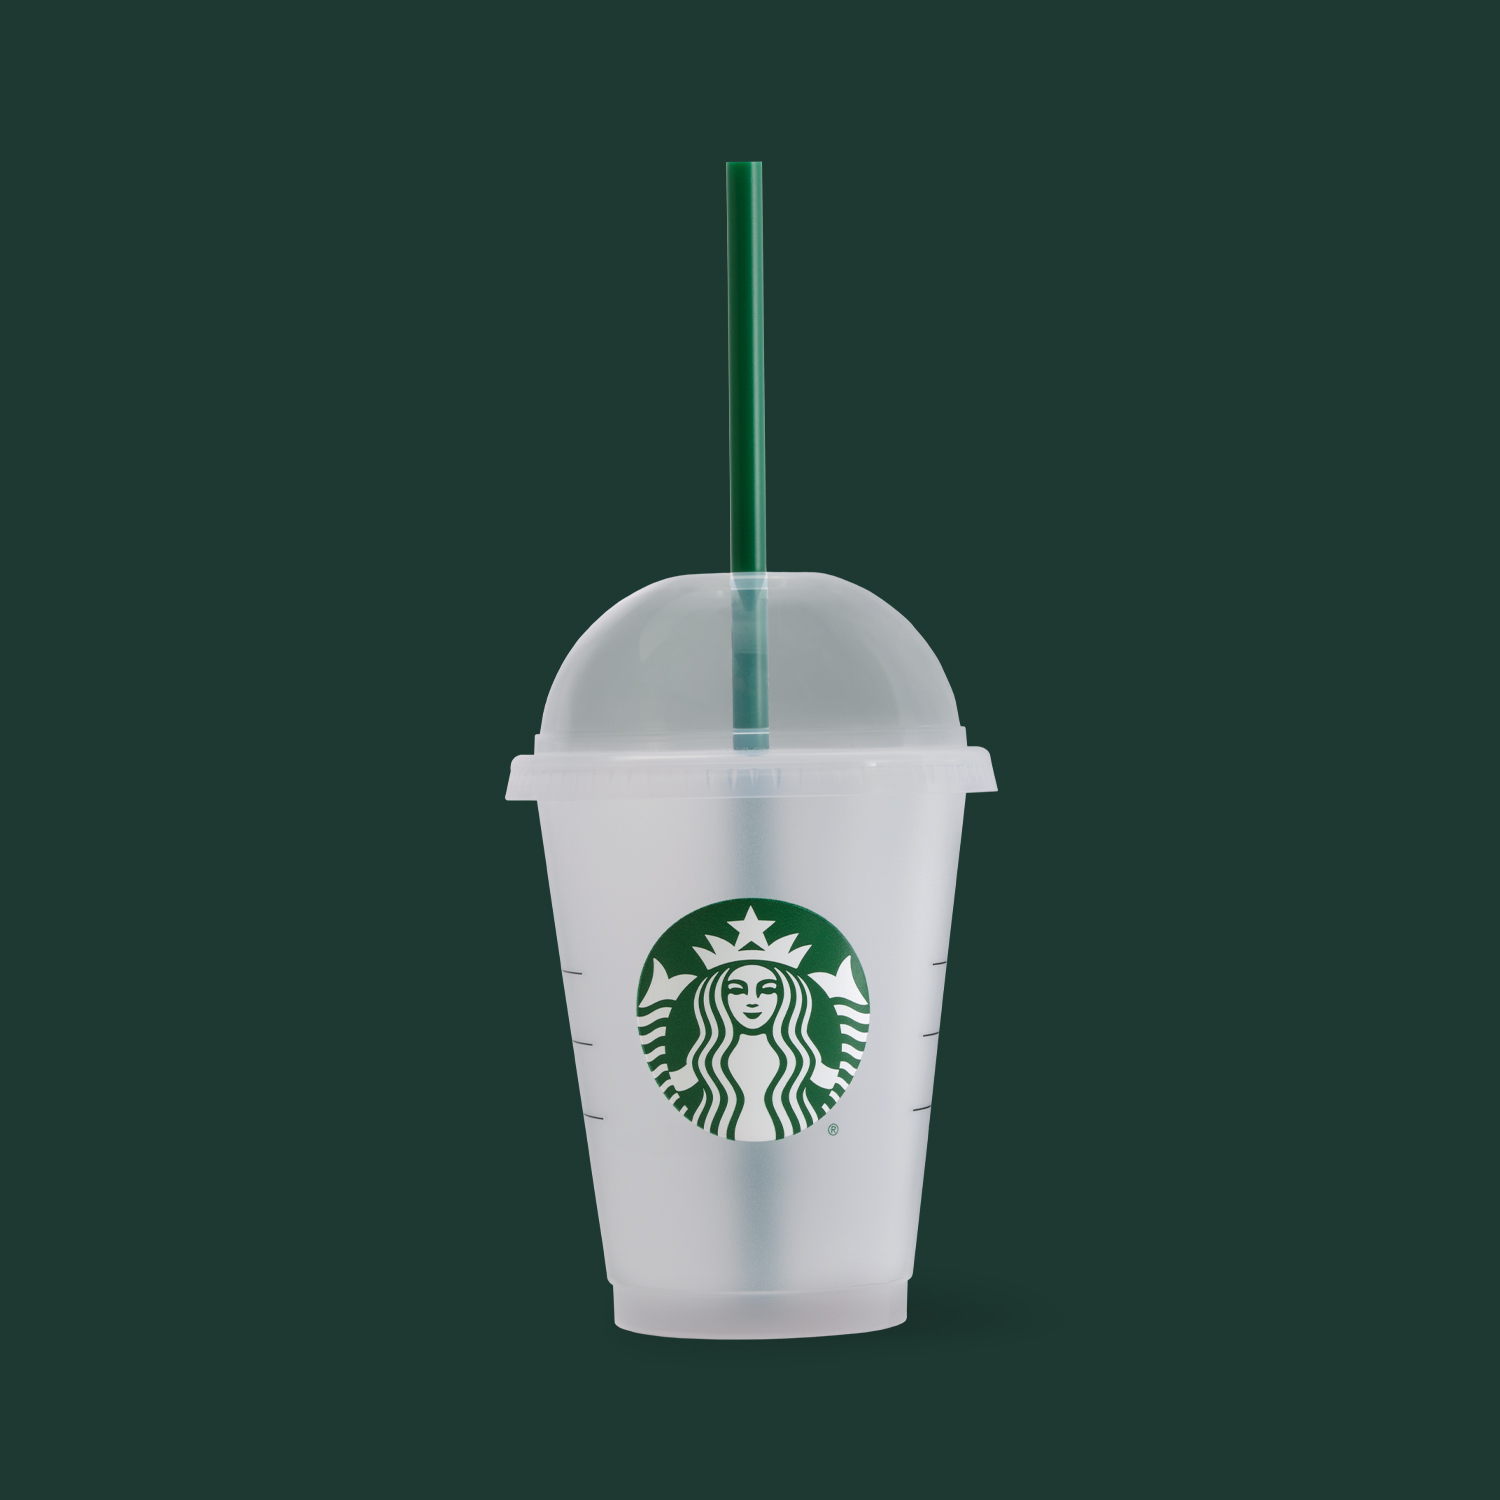 Starbucks Reusable 16oz Cup with Lid